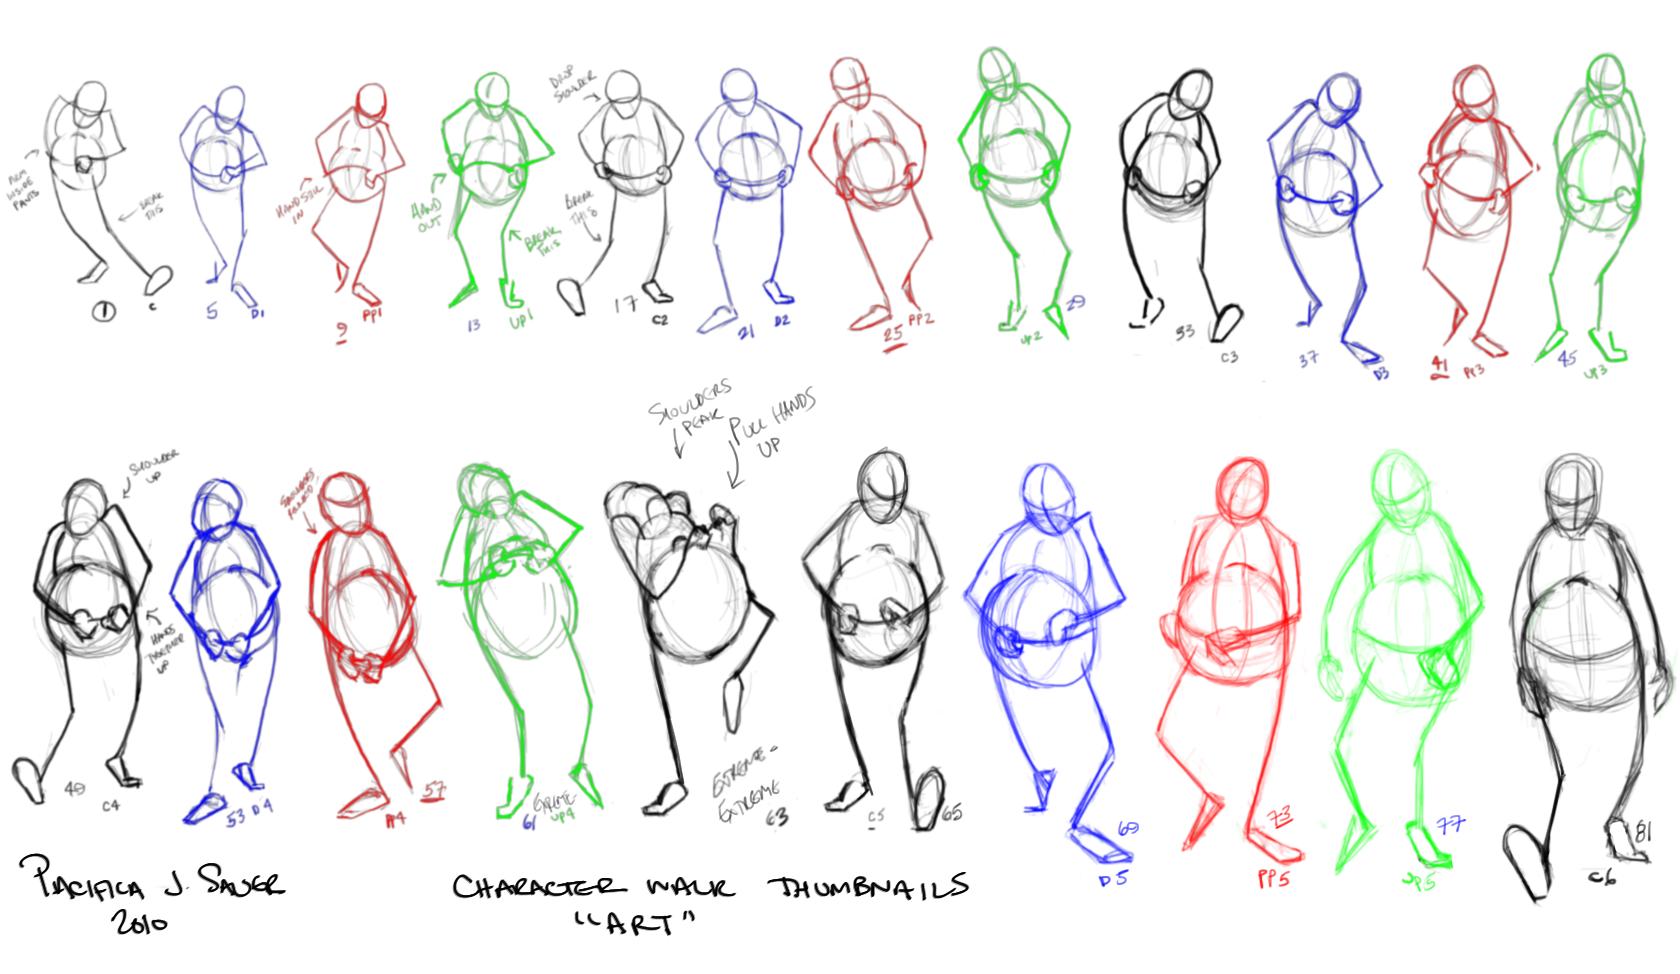 Animation planning fat man walking forward pulling up his pants.